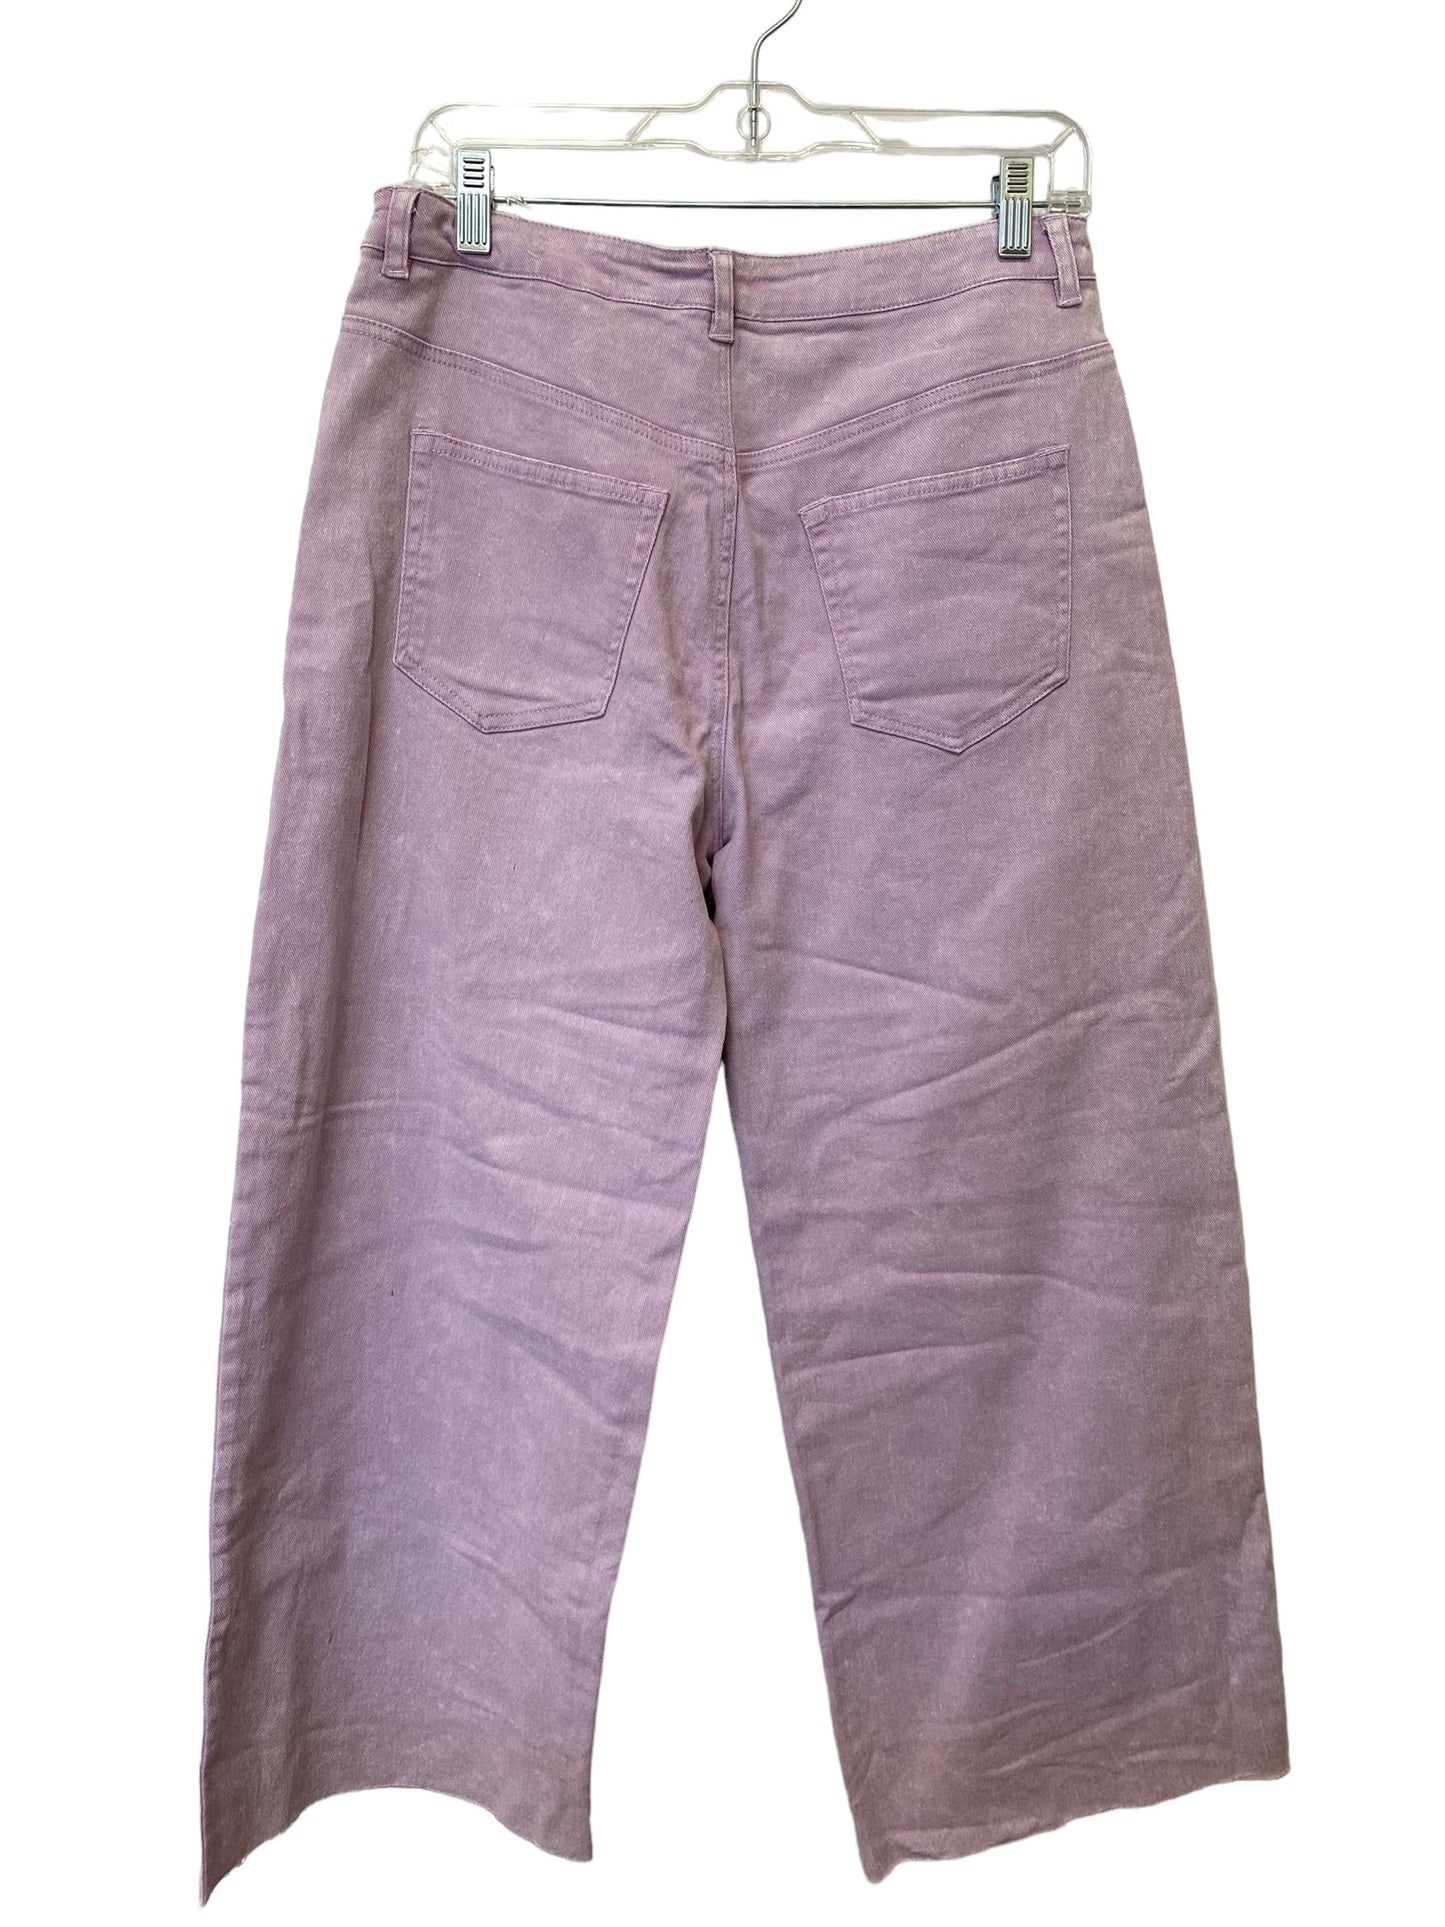 Pants Cropped By Entro  Size: L